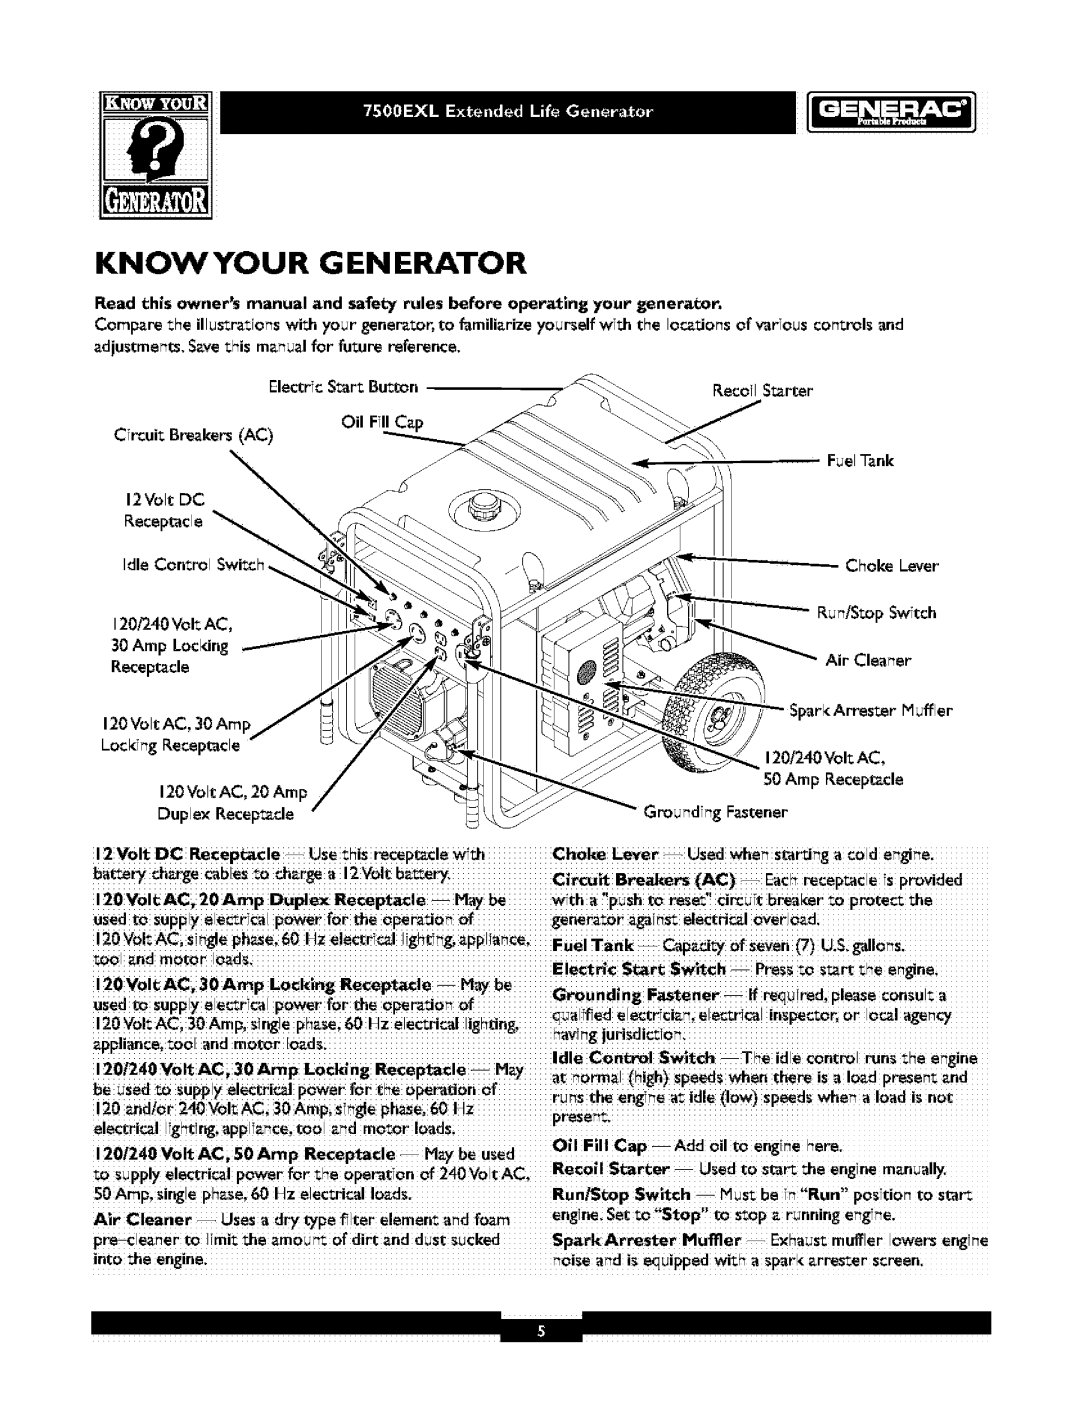 Generac 1019-3 Know Your G En Erator, GroundingF stener, FuelTank 12Volt DC Receptacle, 120/240Volt AC 30 Amp Locldng 